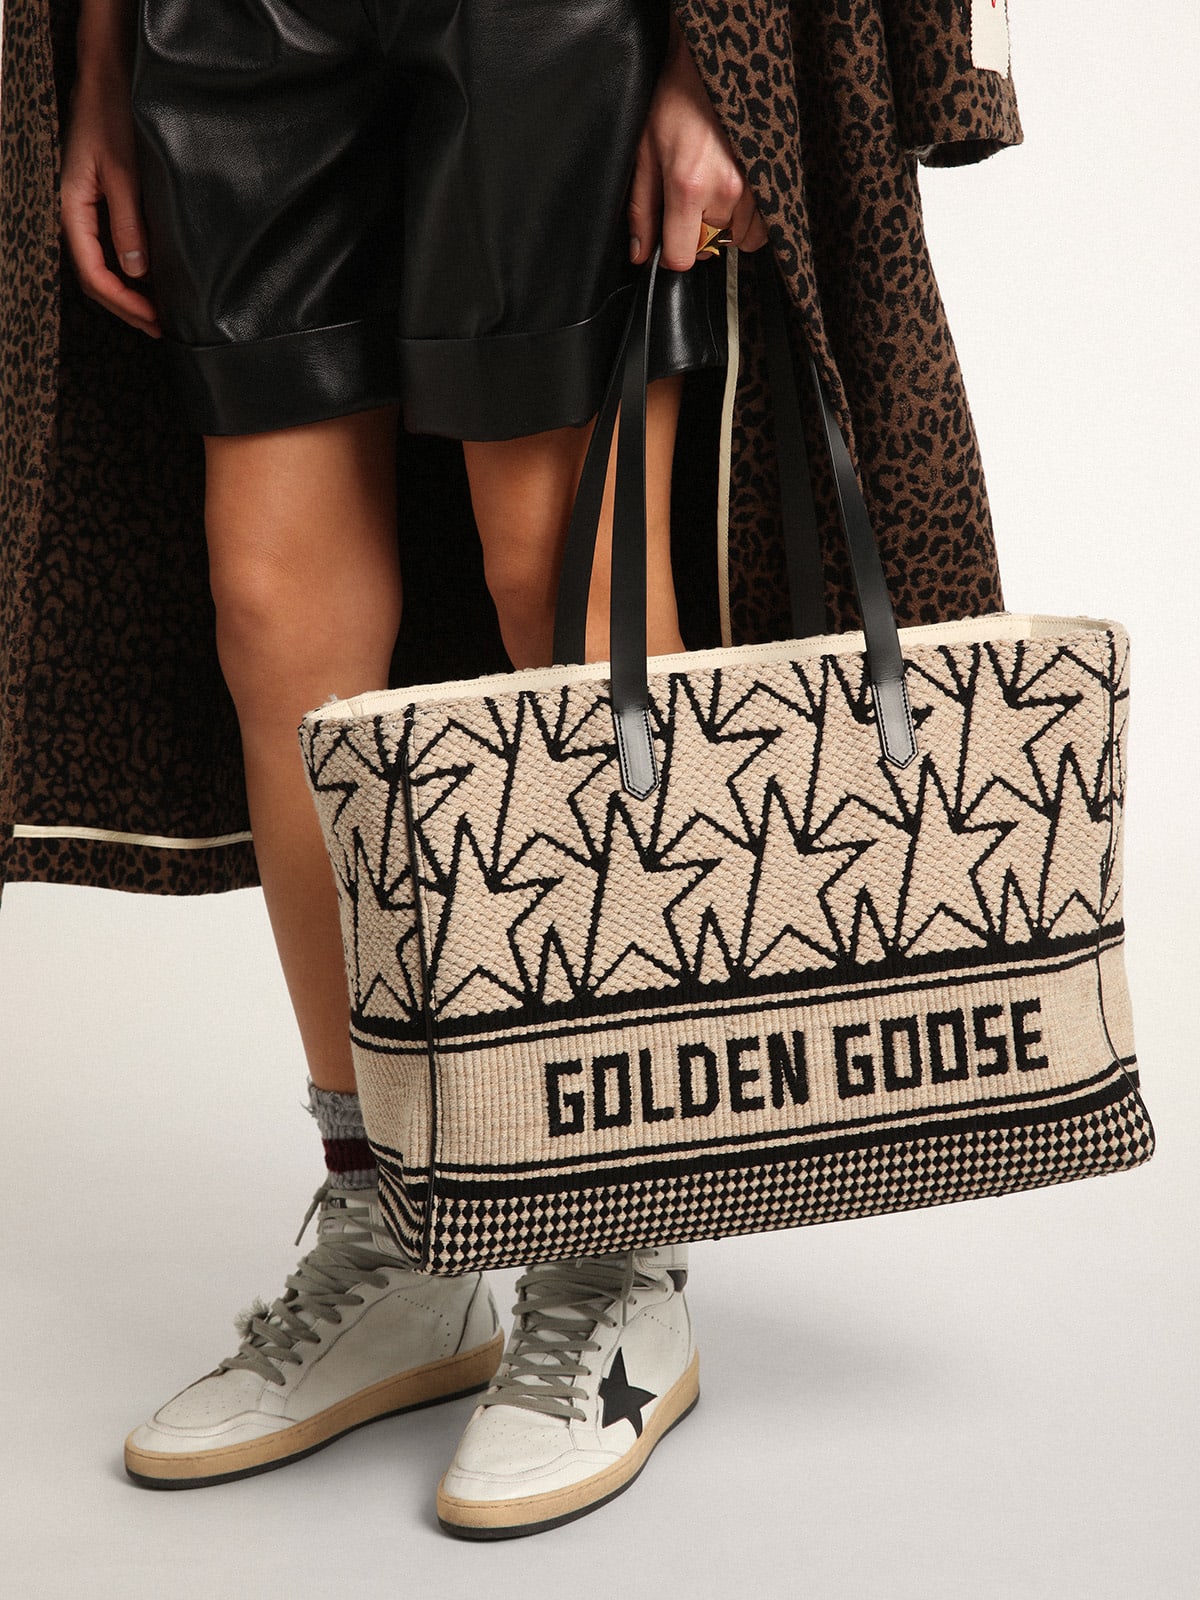 Golden Goose - Bolso California Bag East-West en lana jacquard color blanco leche con monogramas y mensaje Golden Goose de color negro en contraste in 